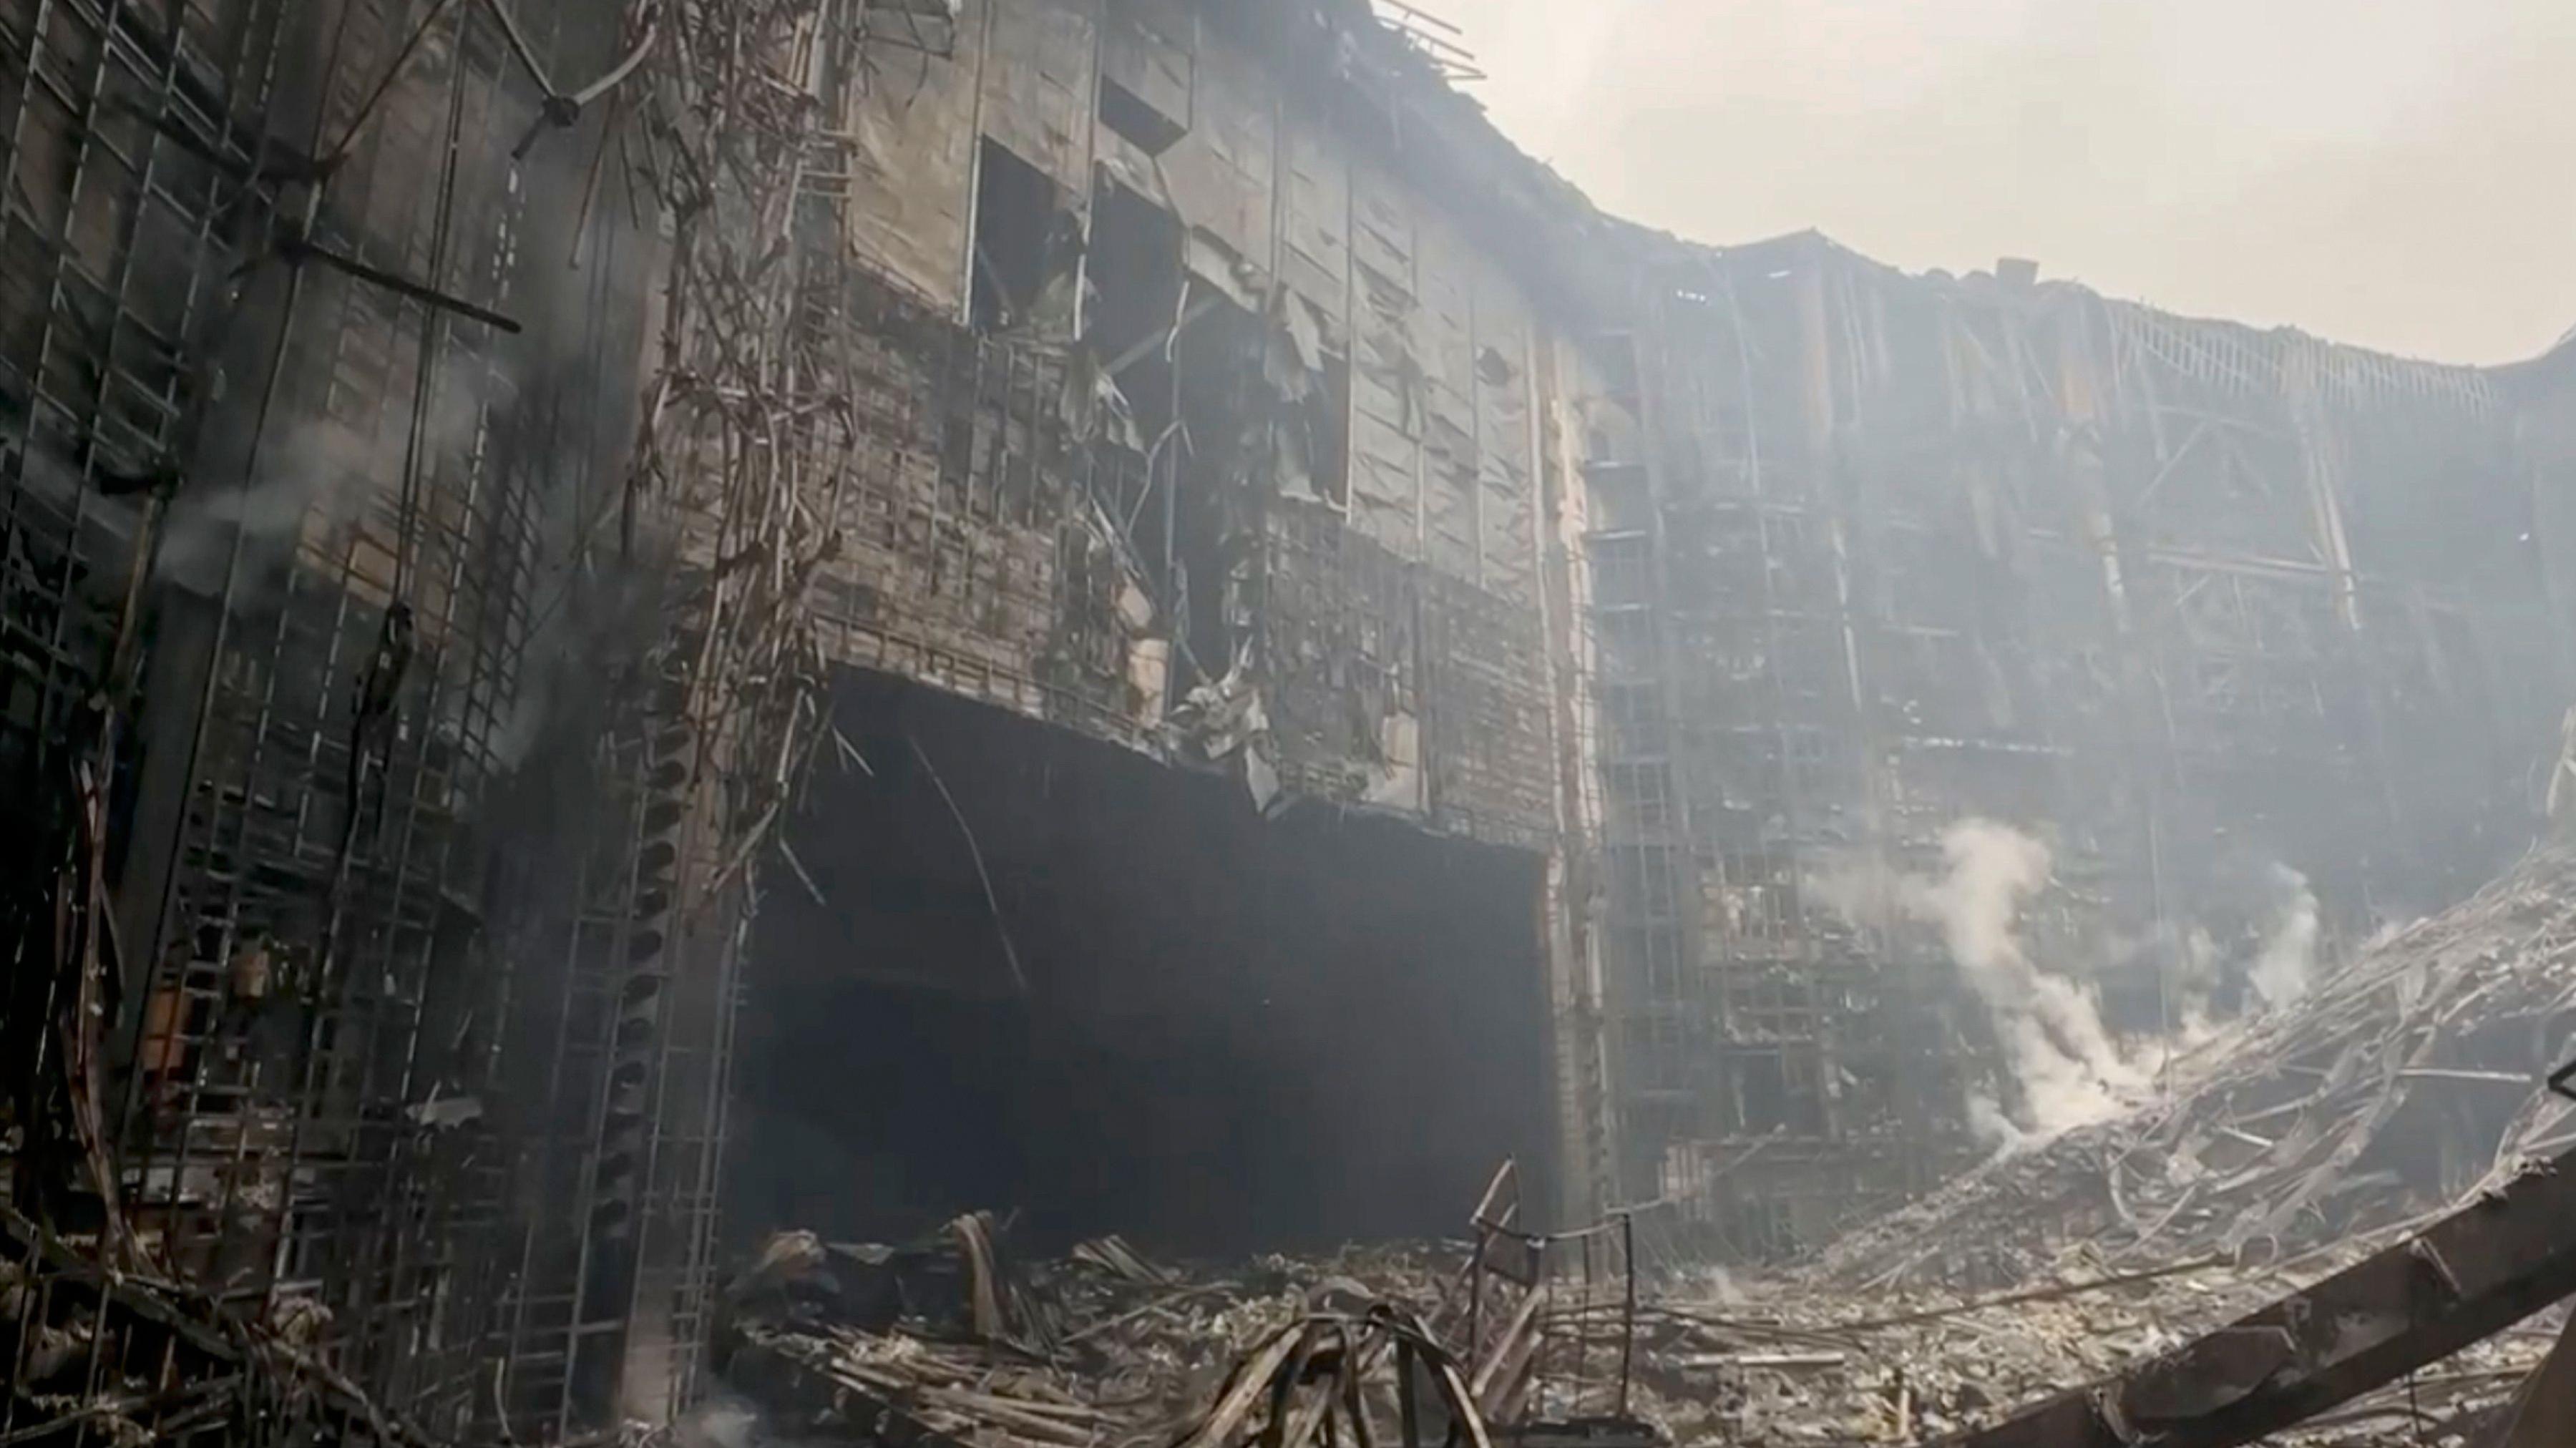 Casa de show incendiada após o ataque de sexta-feira